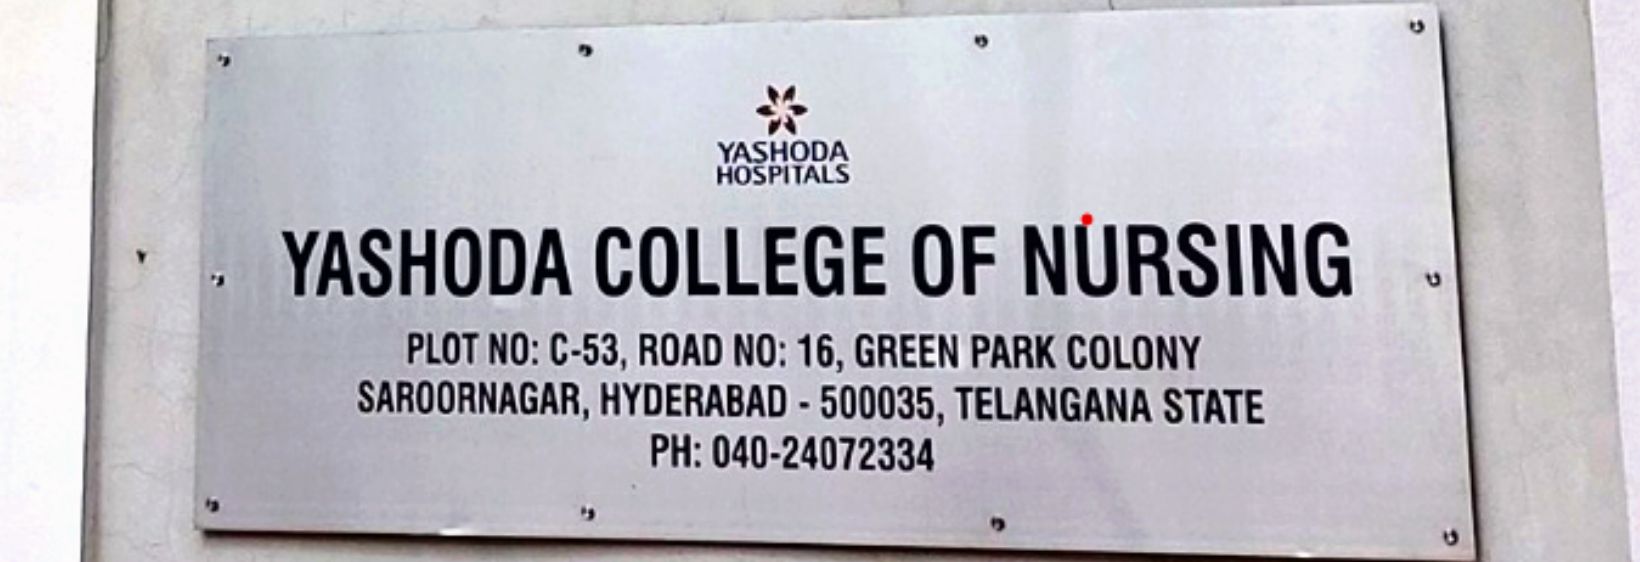 Yashoda College of Nursing - Hyderabad